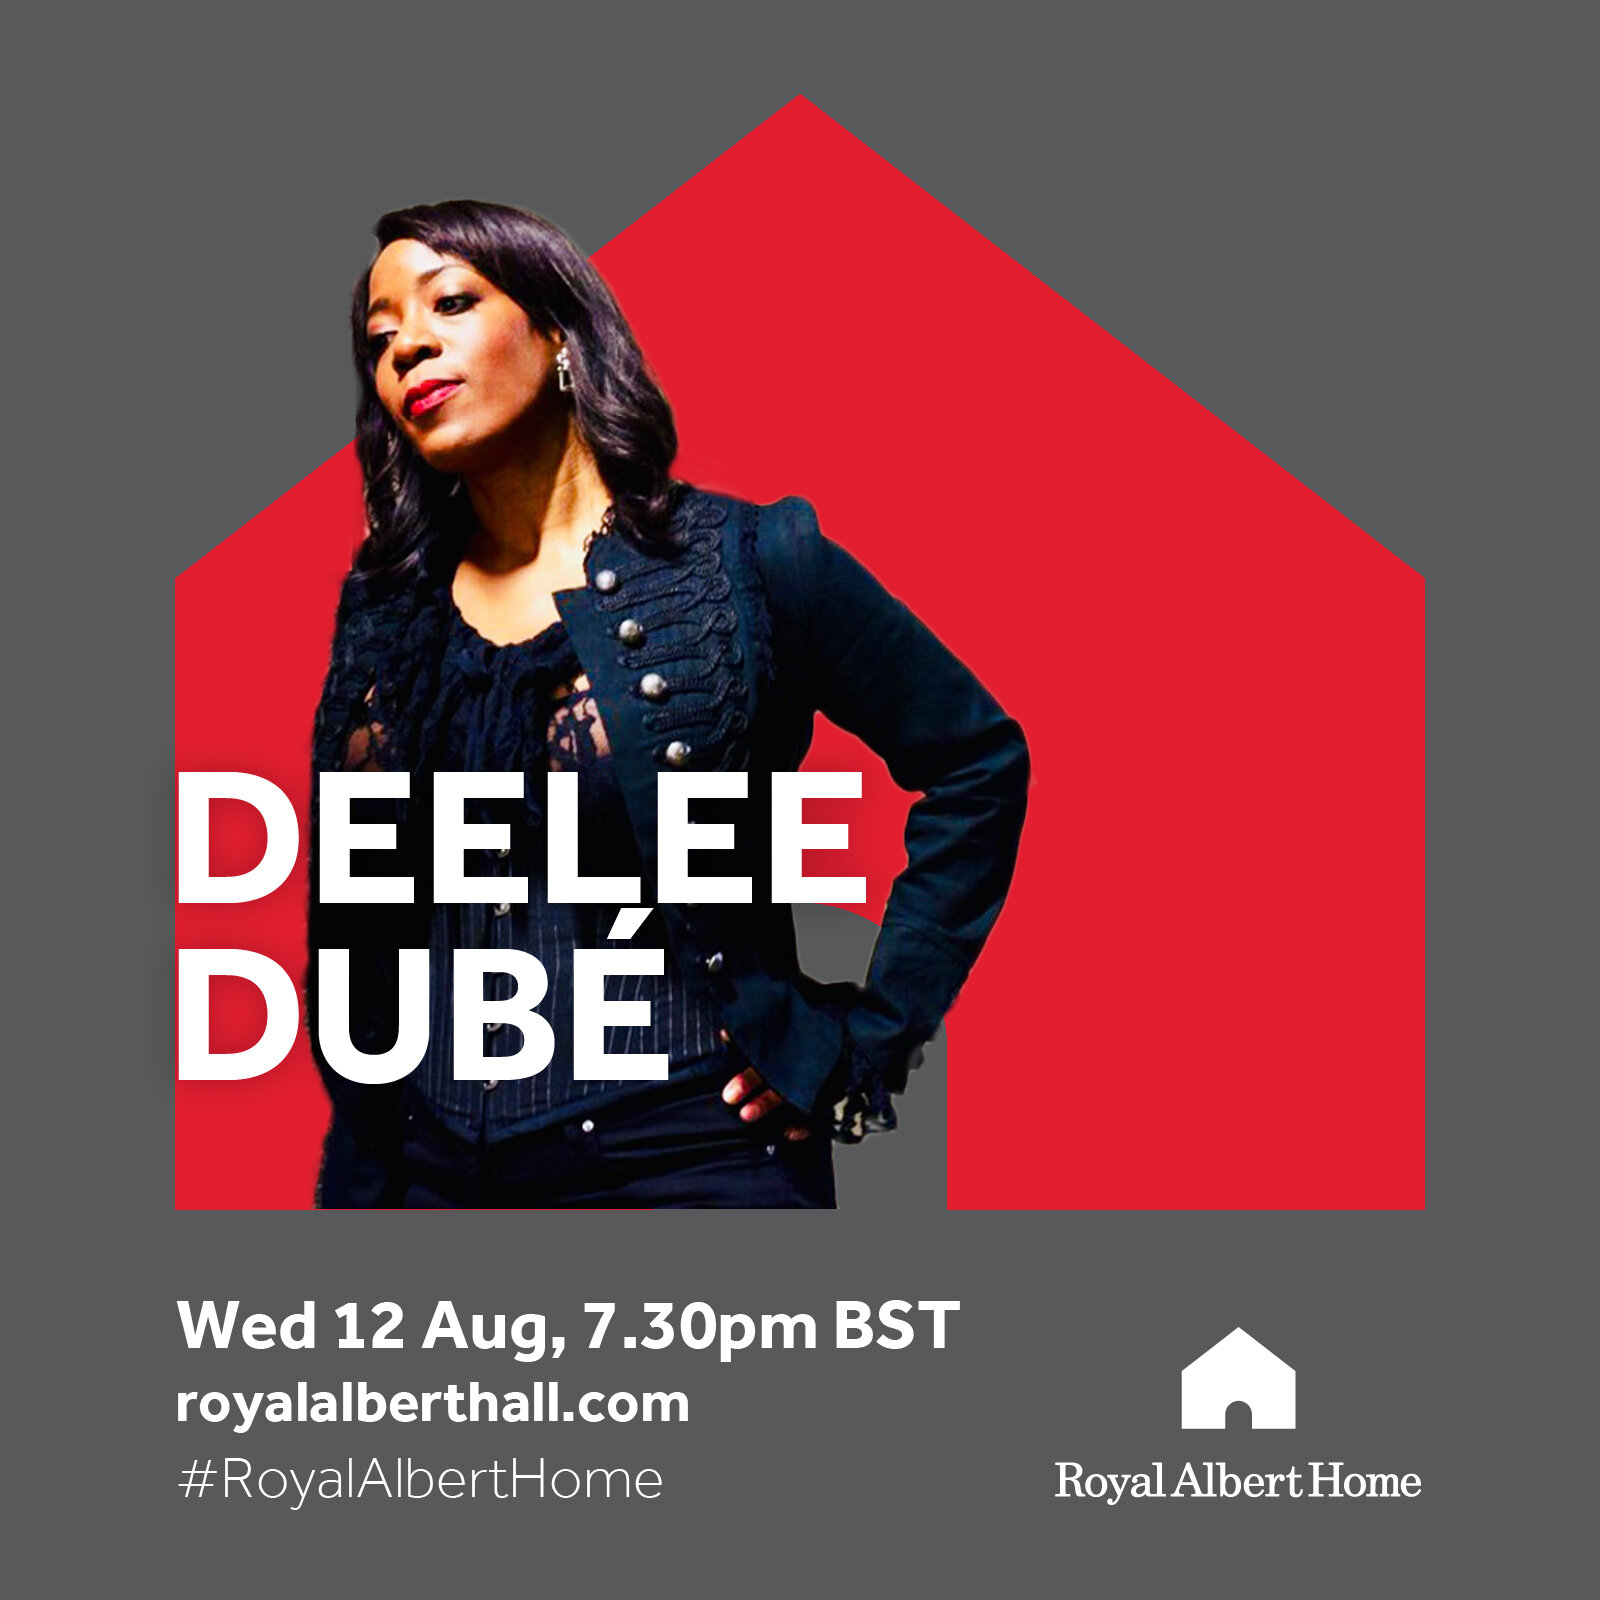 RA Home Sessions Present Deelee Dubé